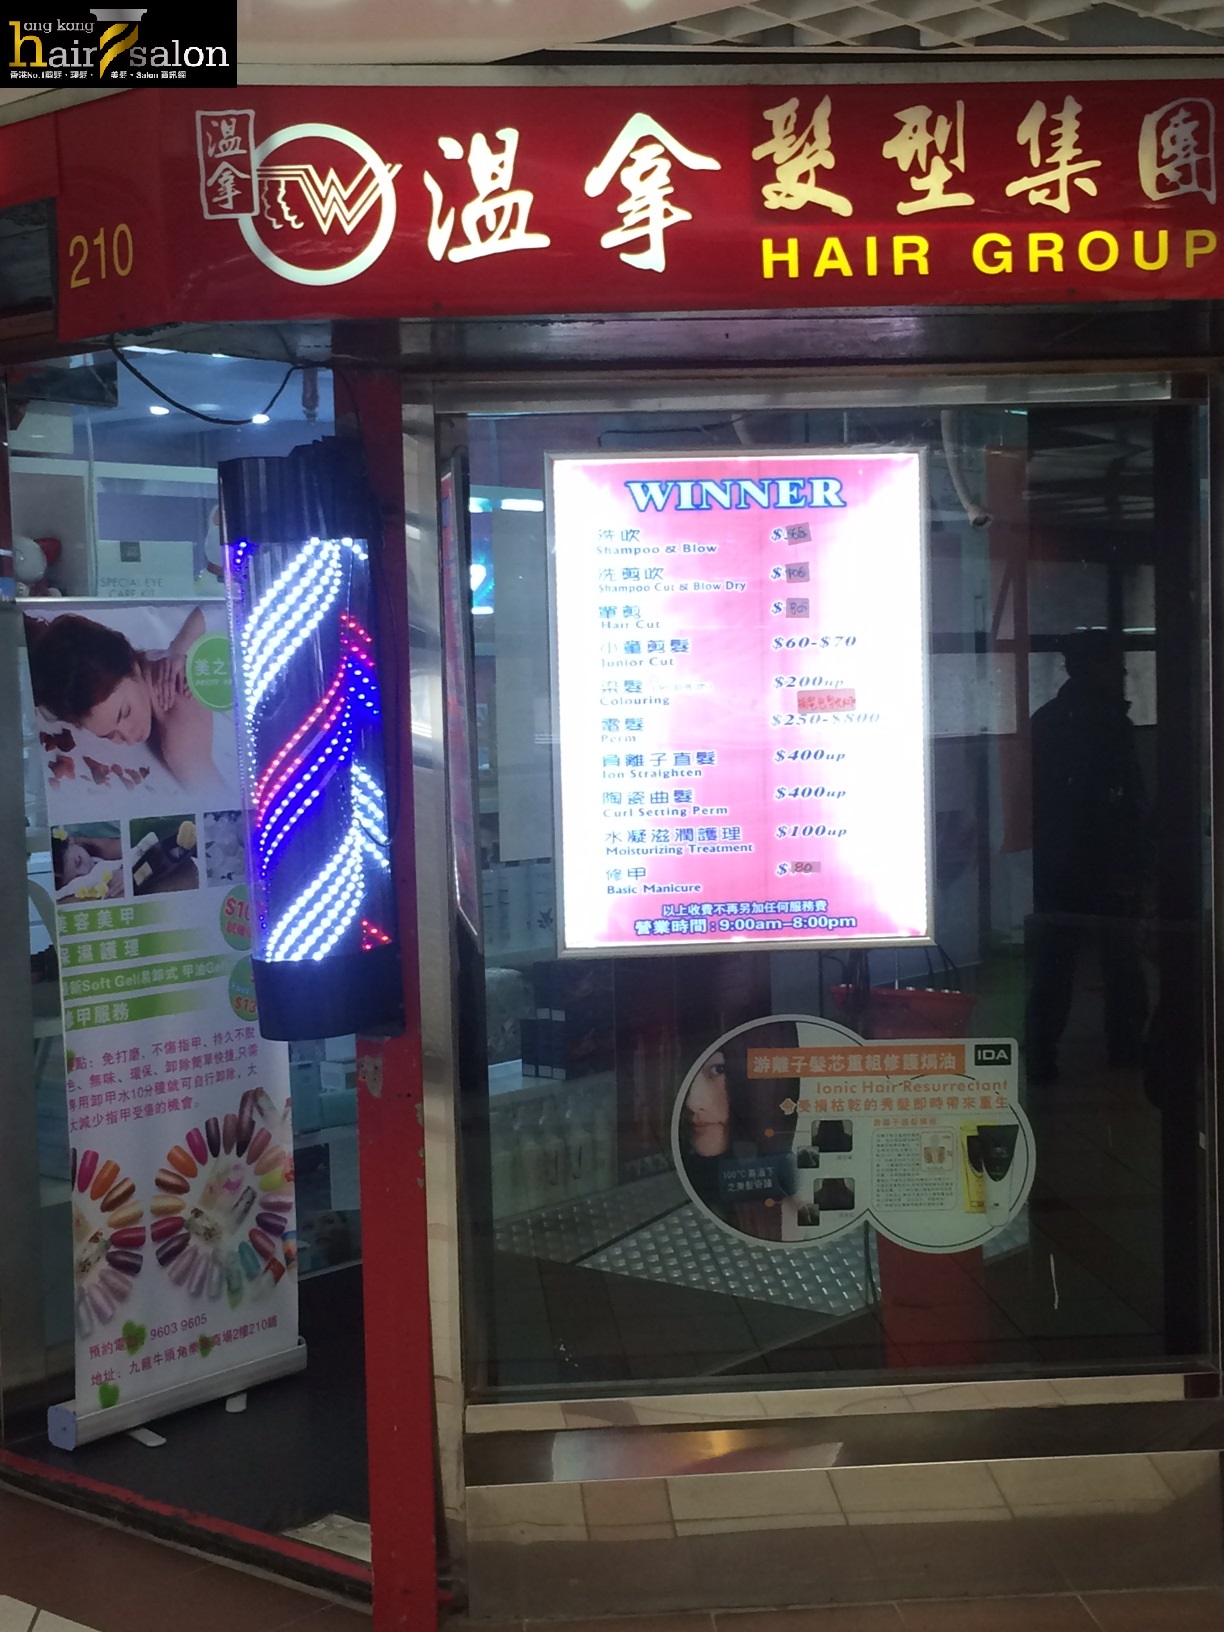 Electric hair: 溫拿髮型集團 Hair Group